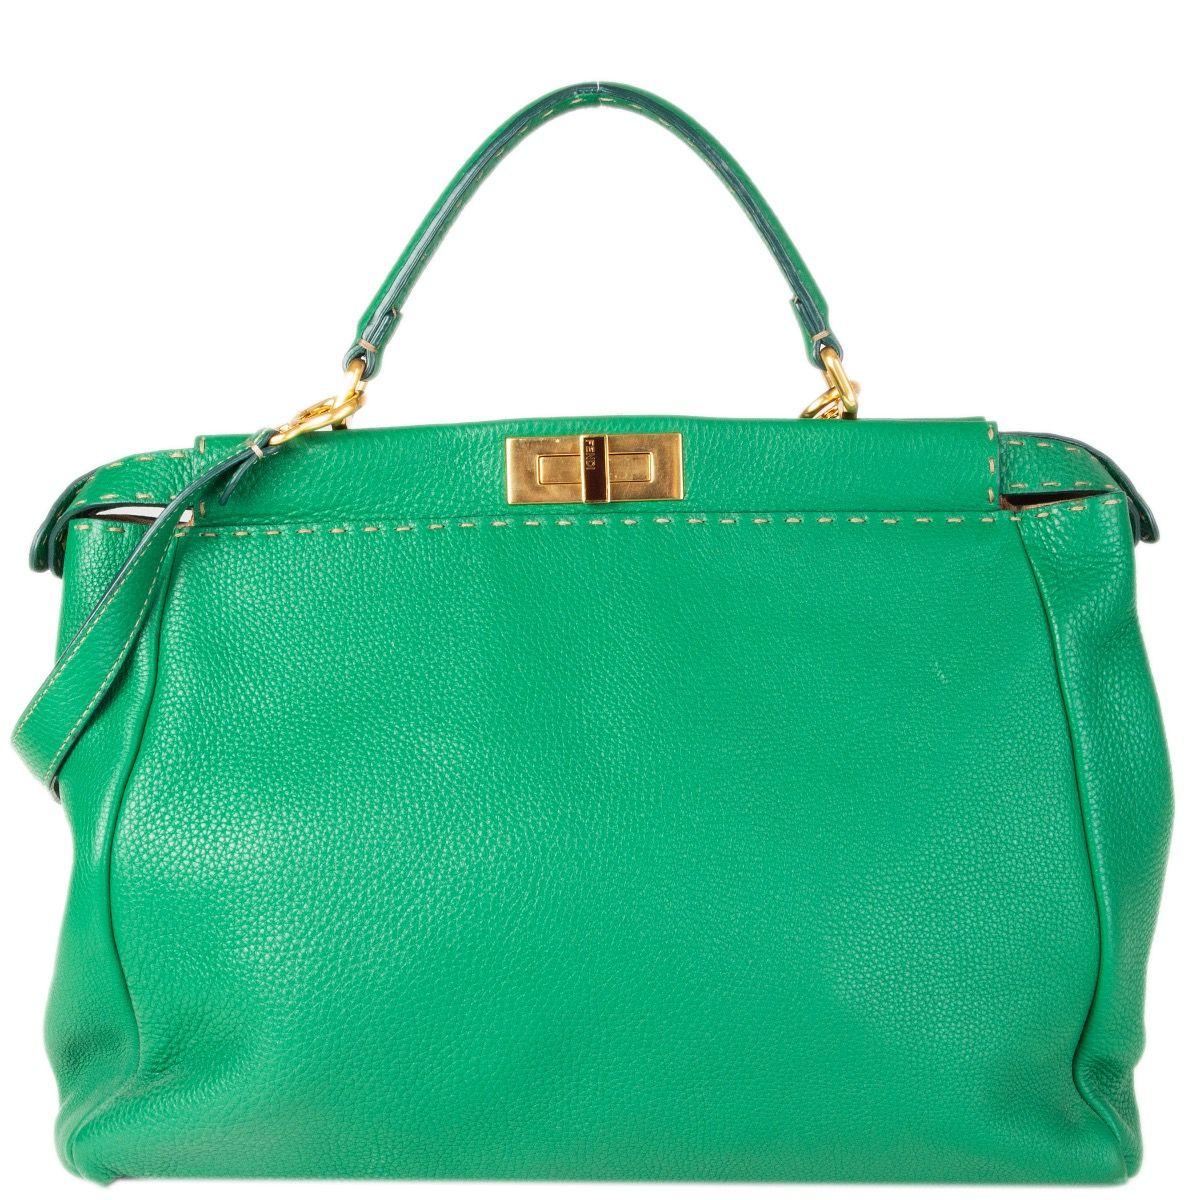 Green FENDI green leather PEEKABOO LARGE Shoulder Bag